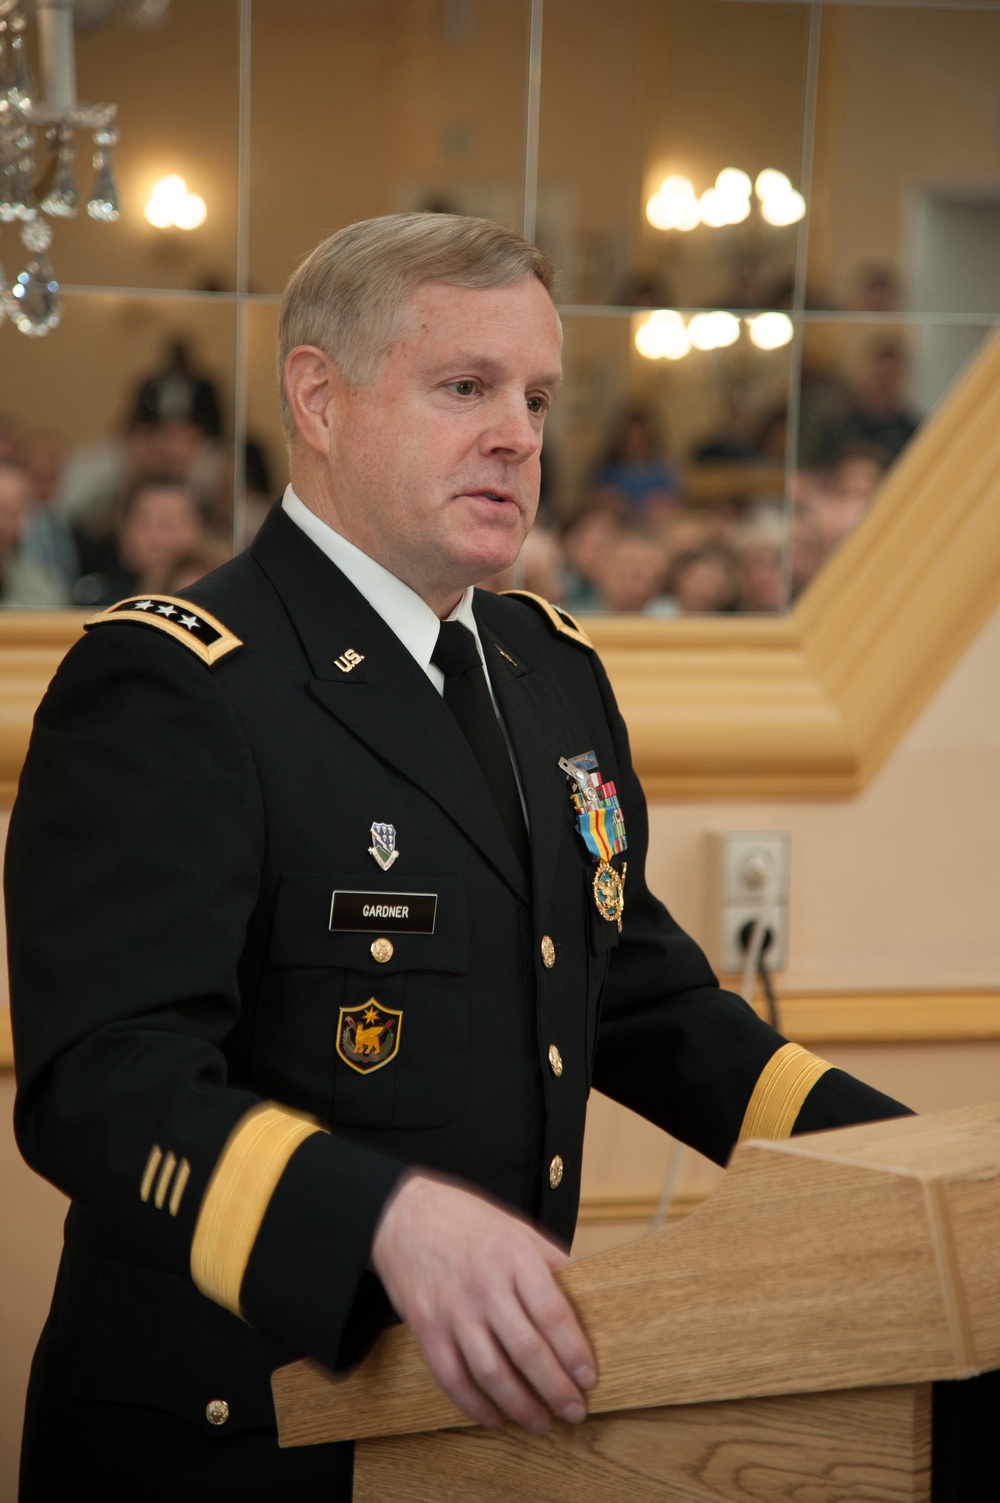 Recognition and retirement: Lt. Gen. John Gardner